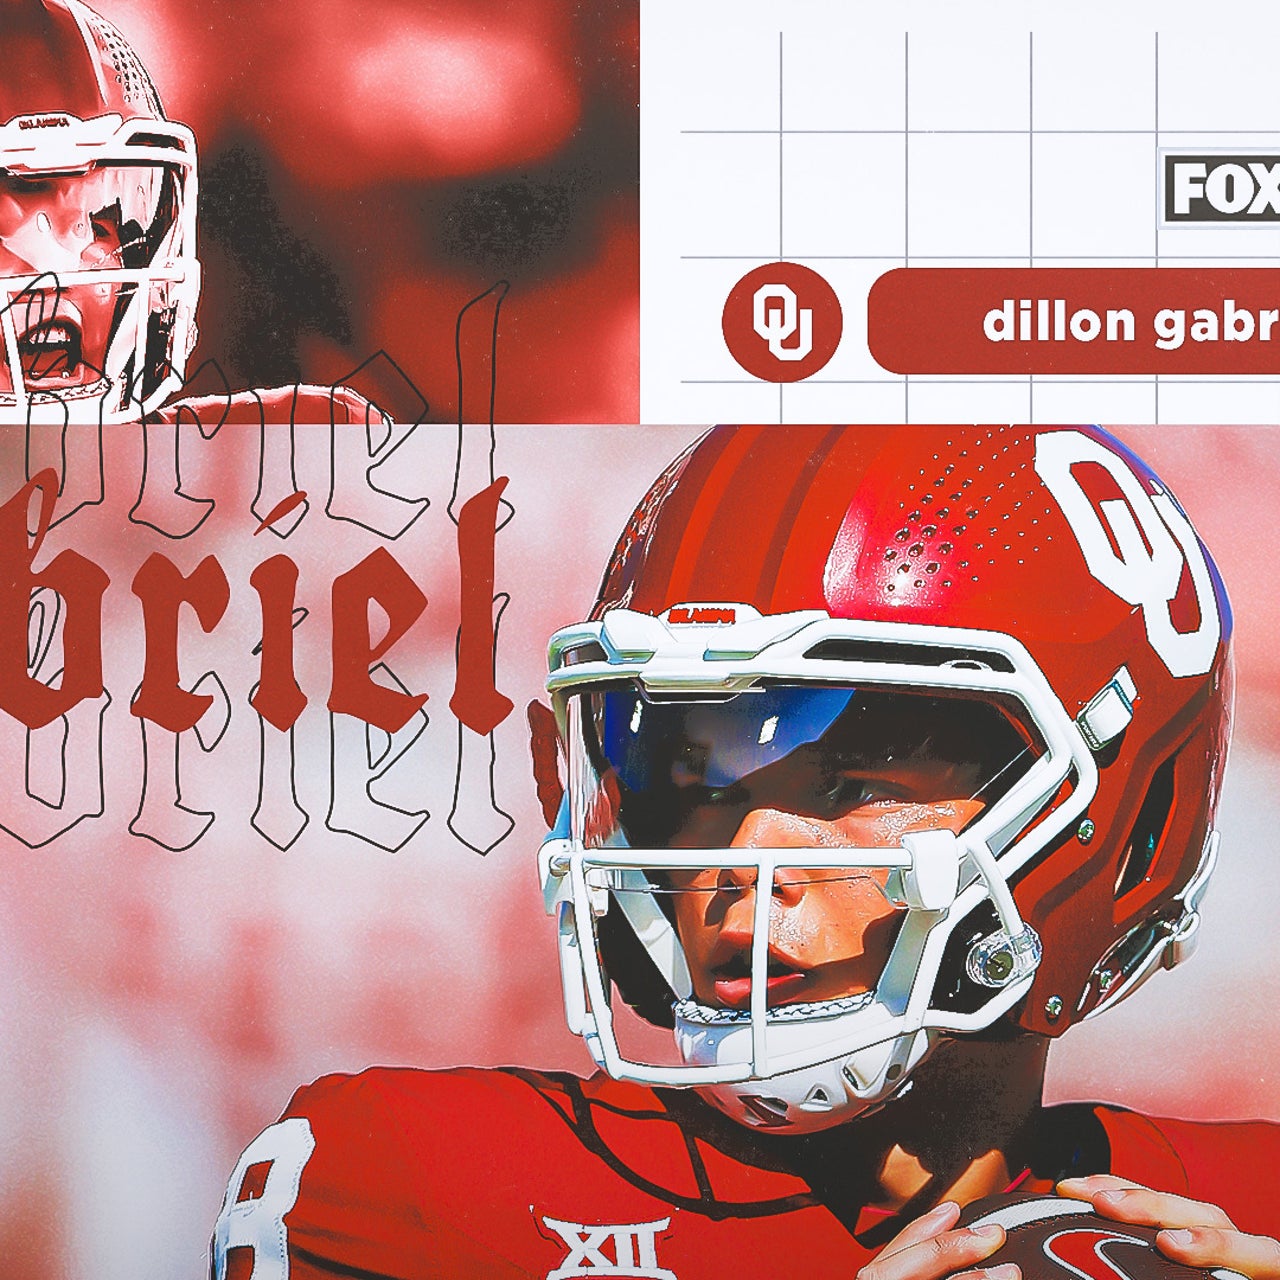 OU football speed drawing of Sooners quarterback Dillon Gabriel